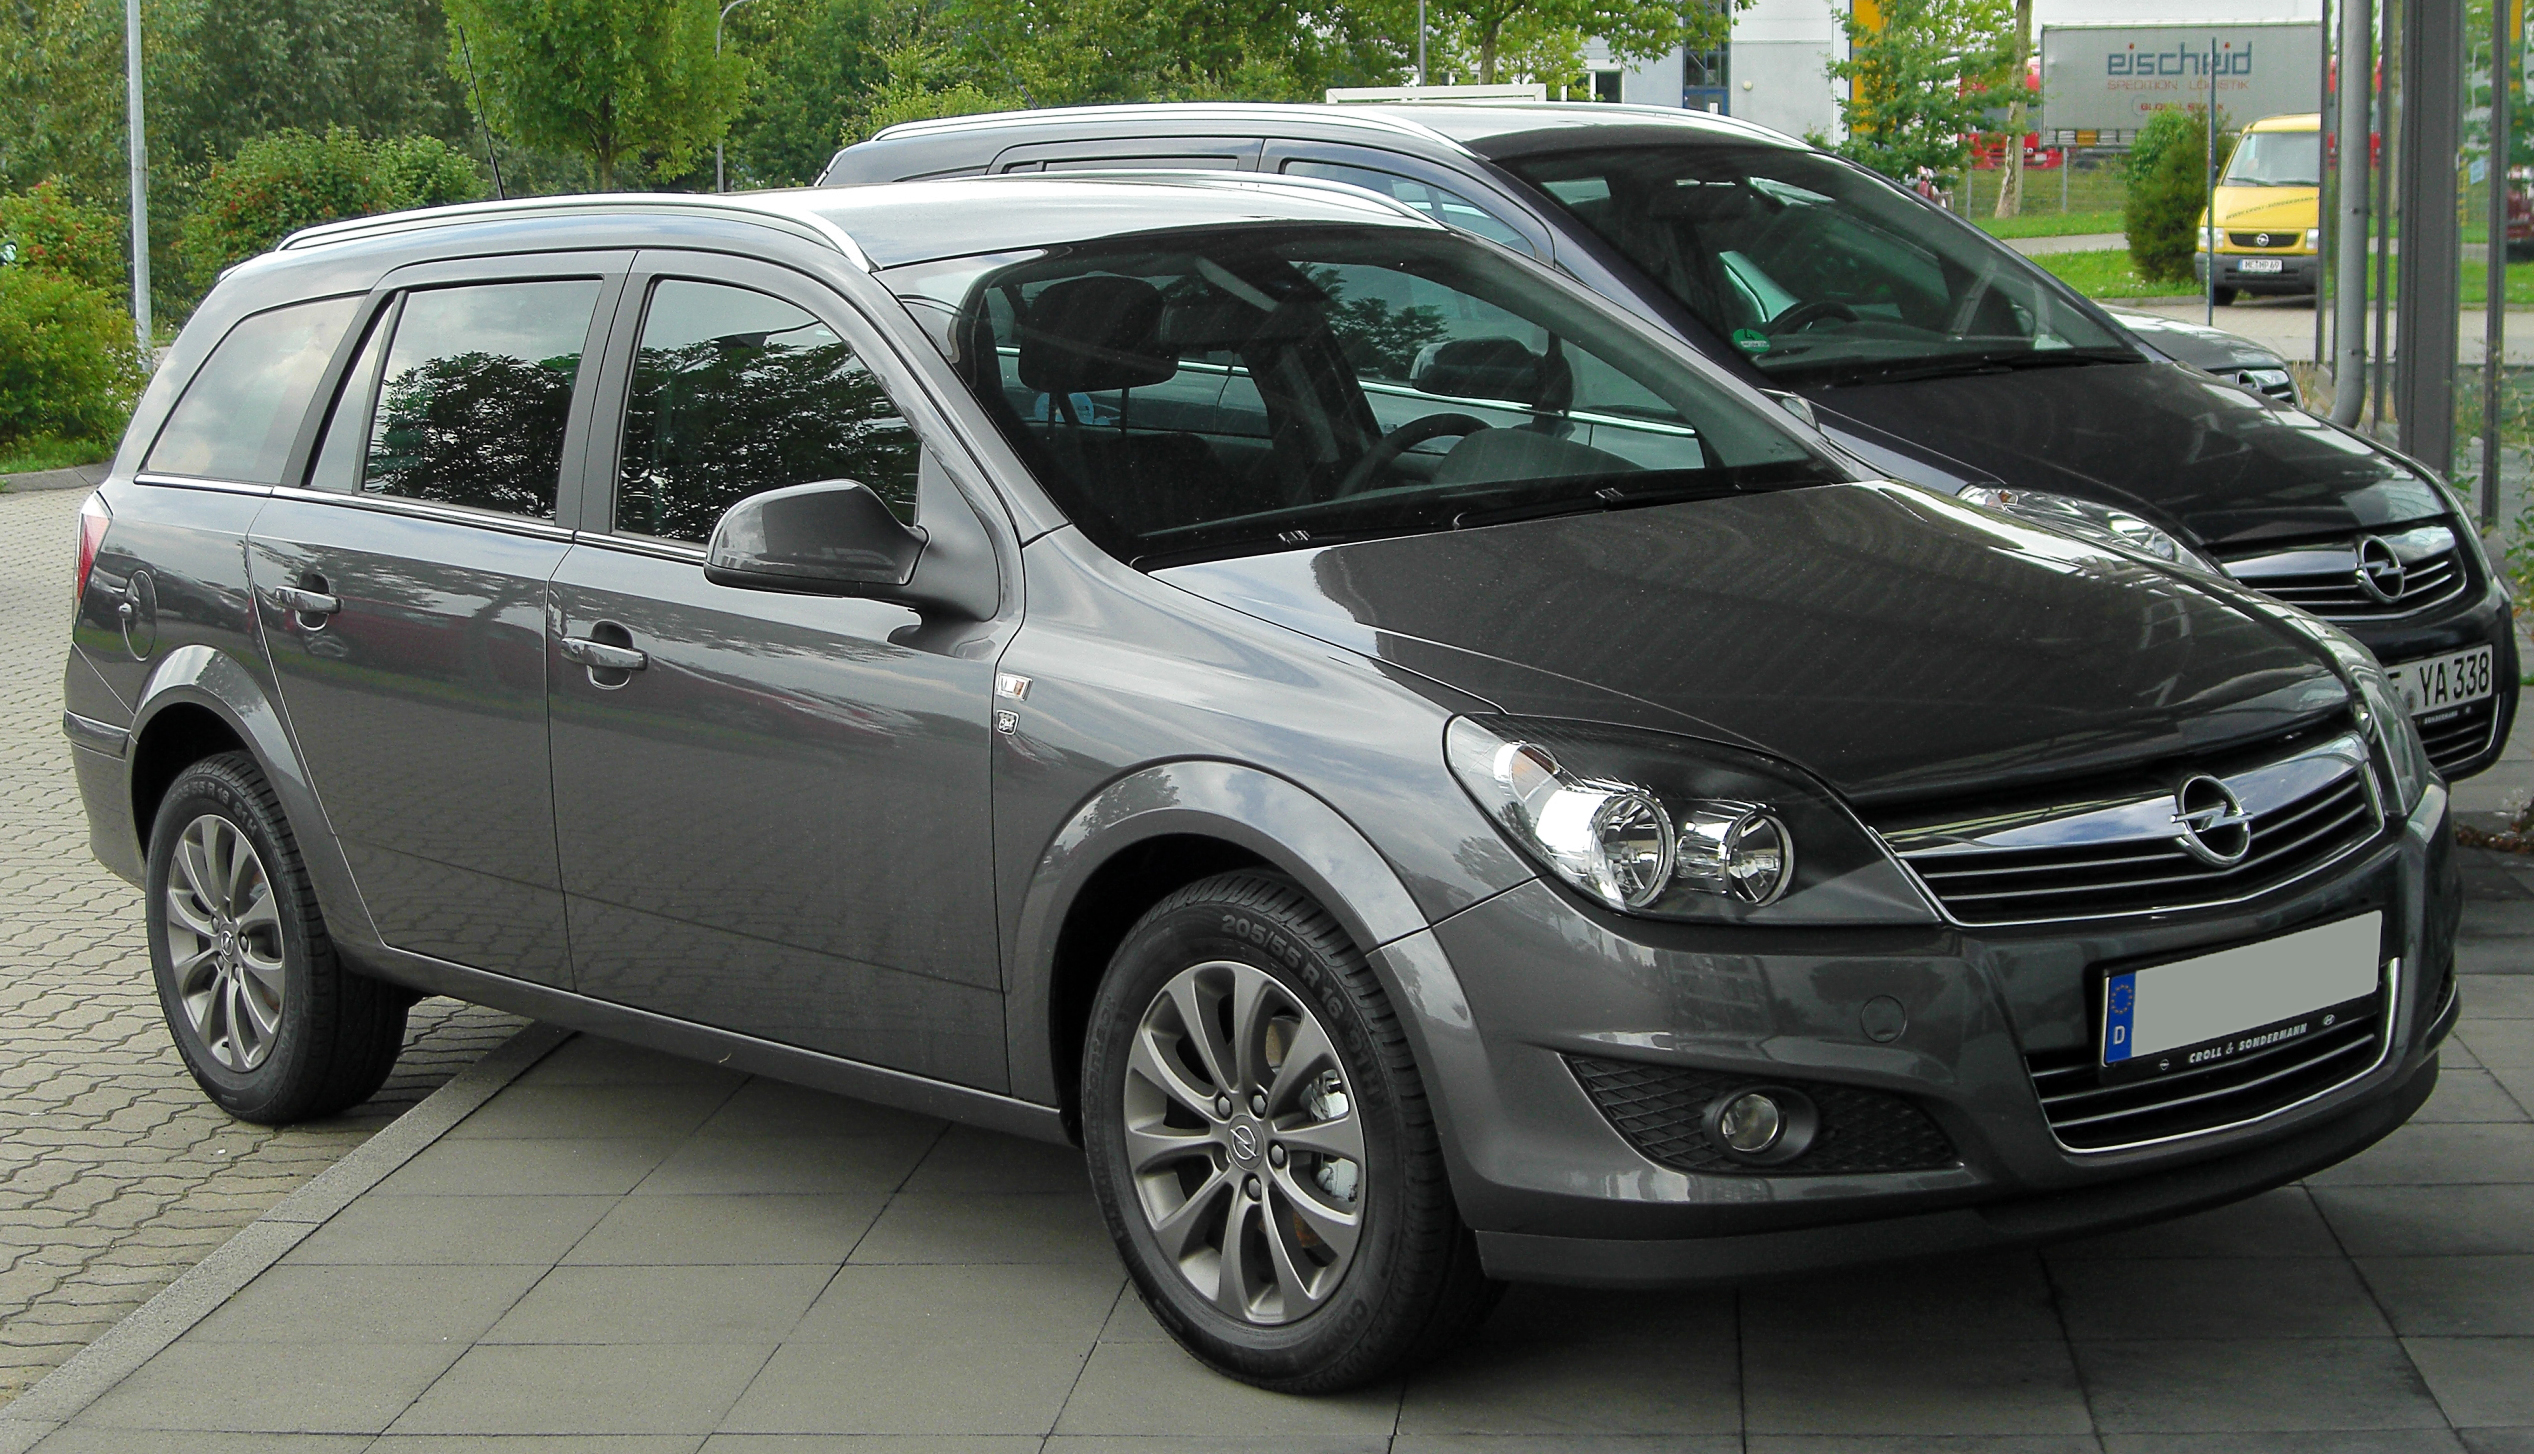 Datei:Opel Astra H GTC Facelift 20090507 front.jpg – Wikipedia